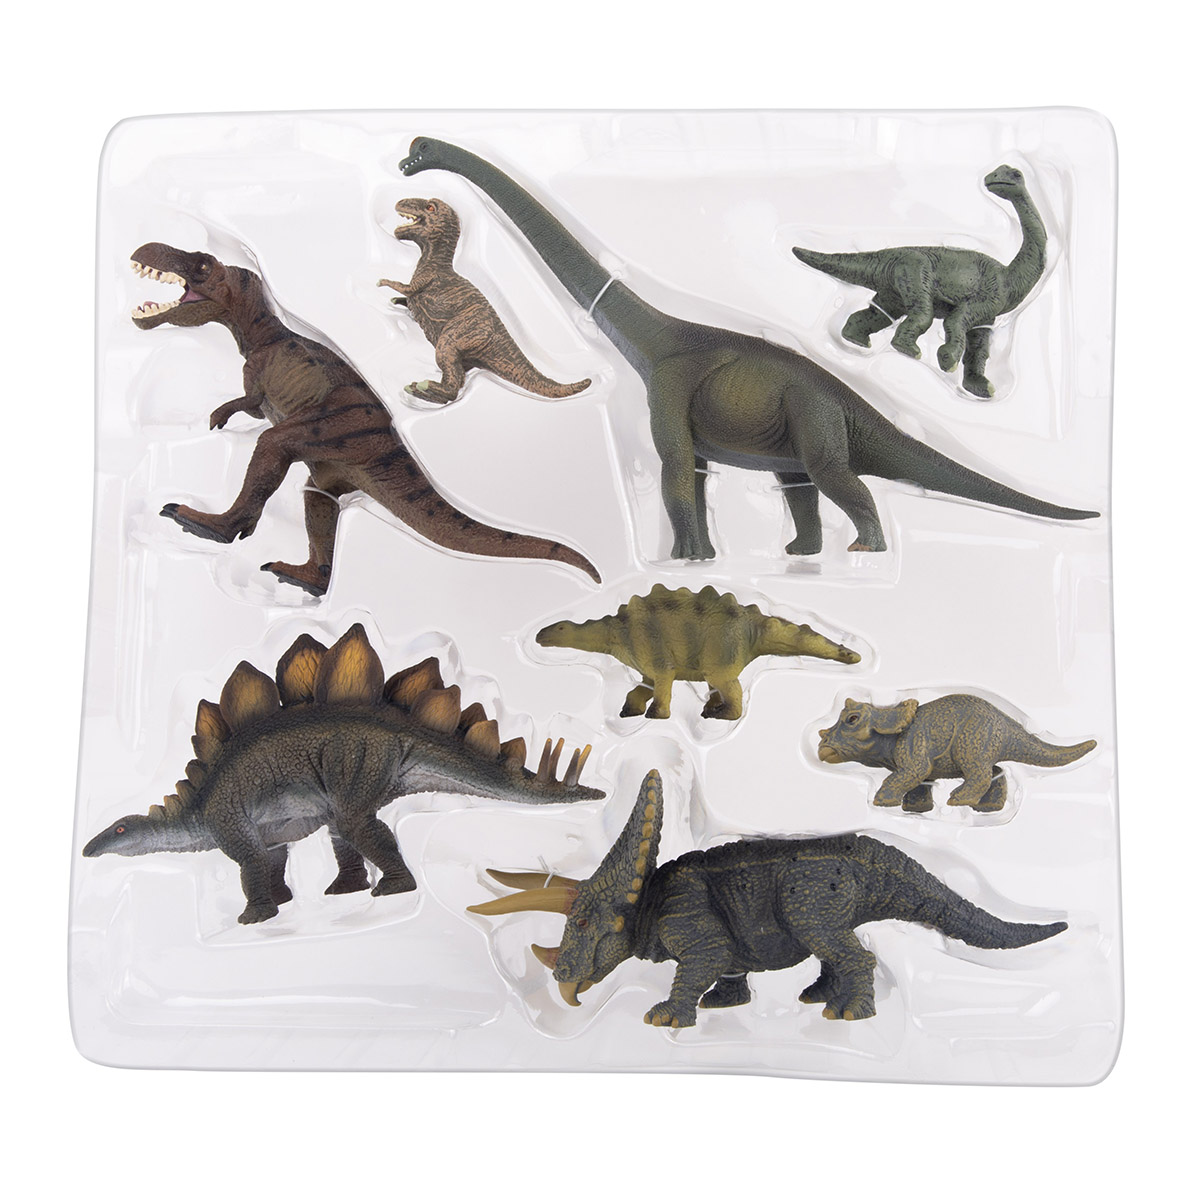 фото Набор динозавров collecta, 8 фигурок